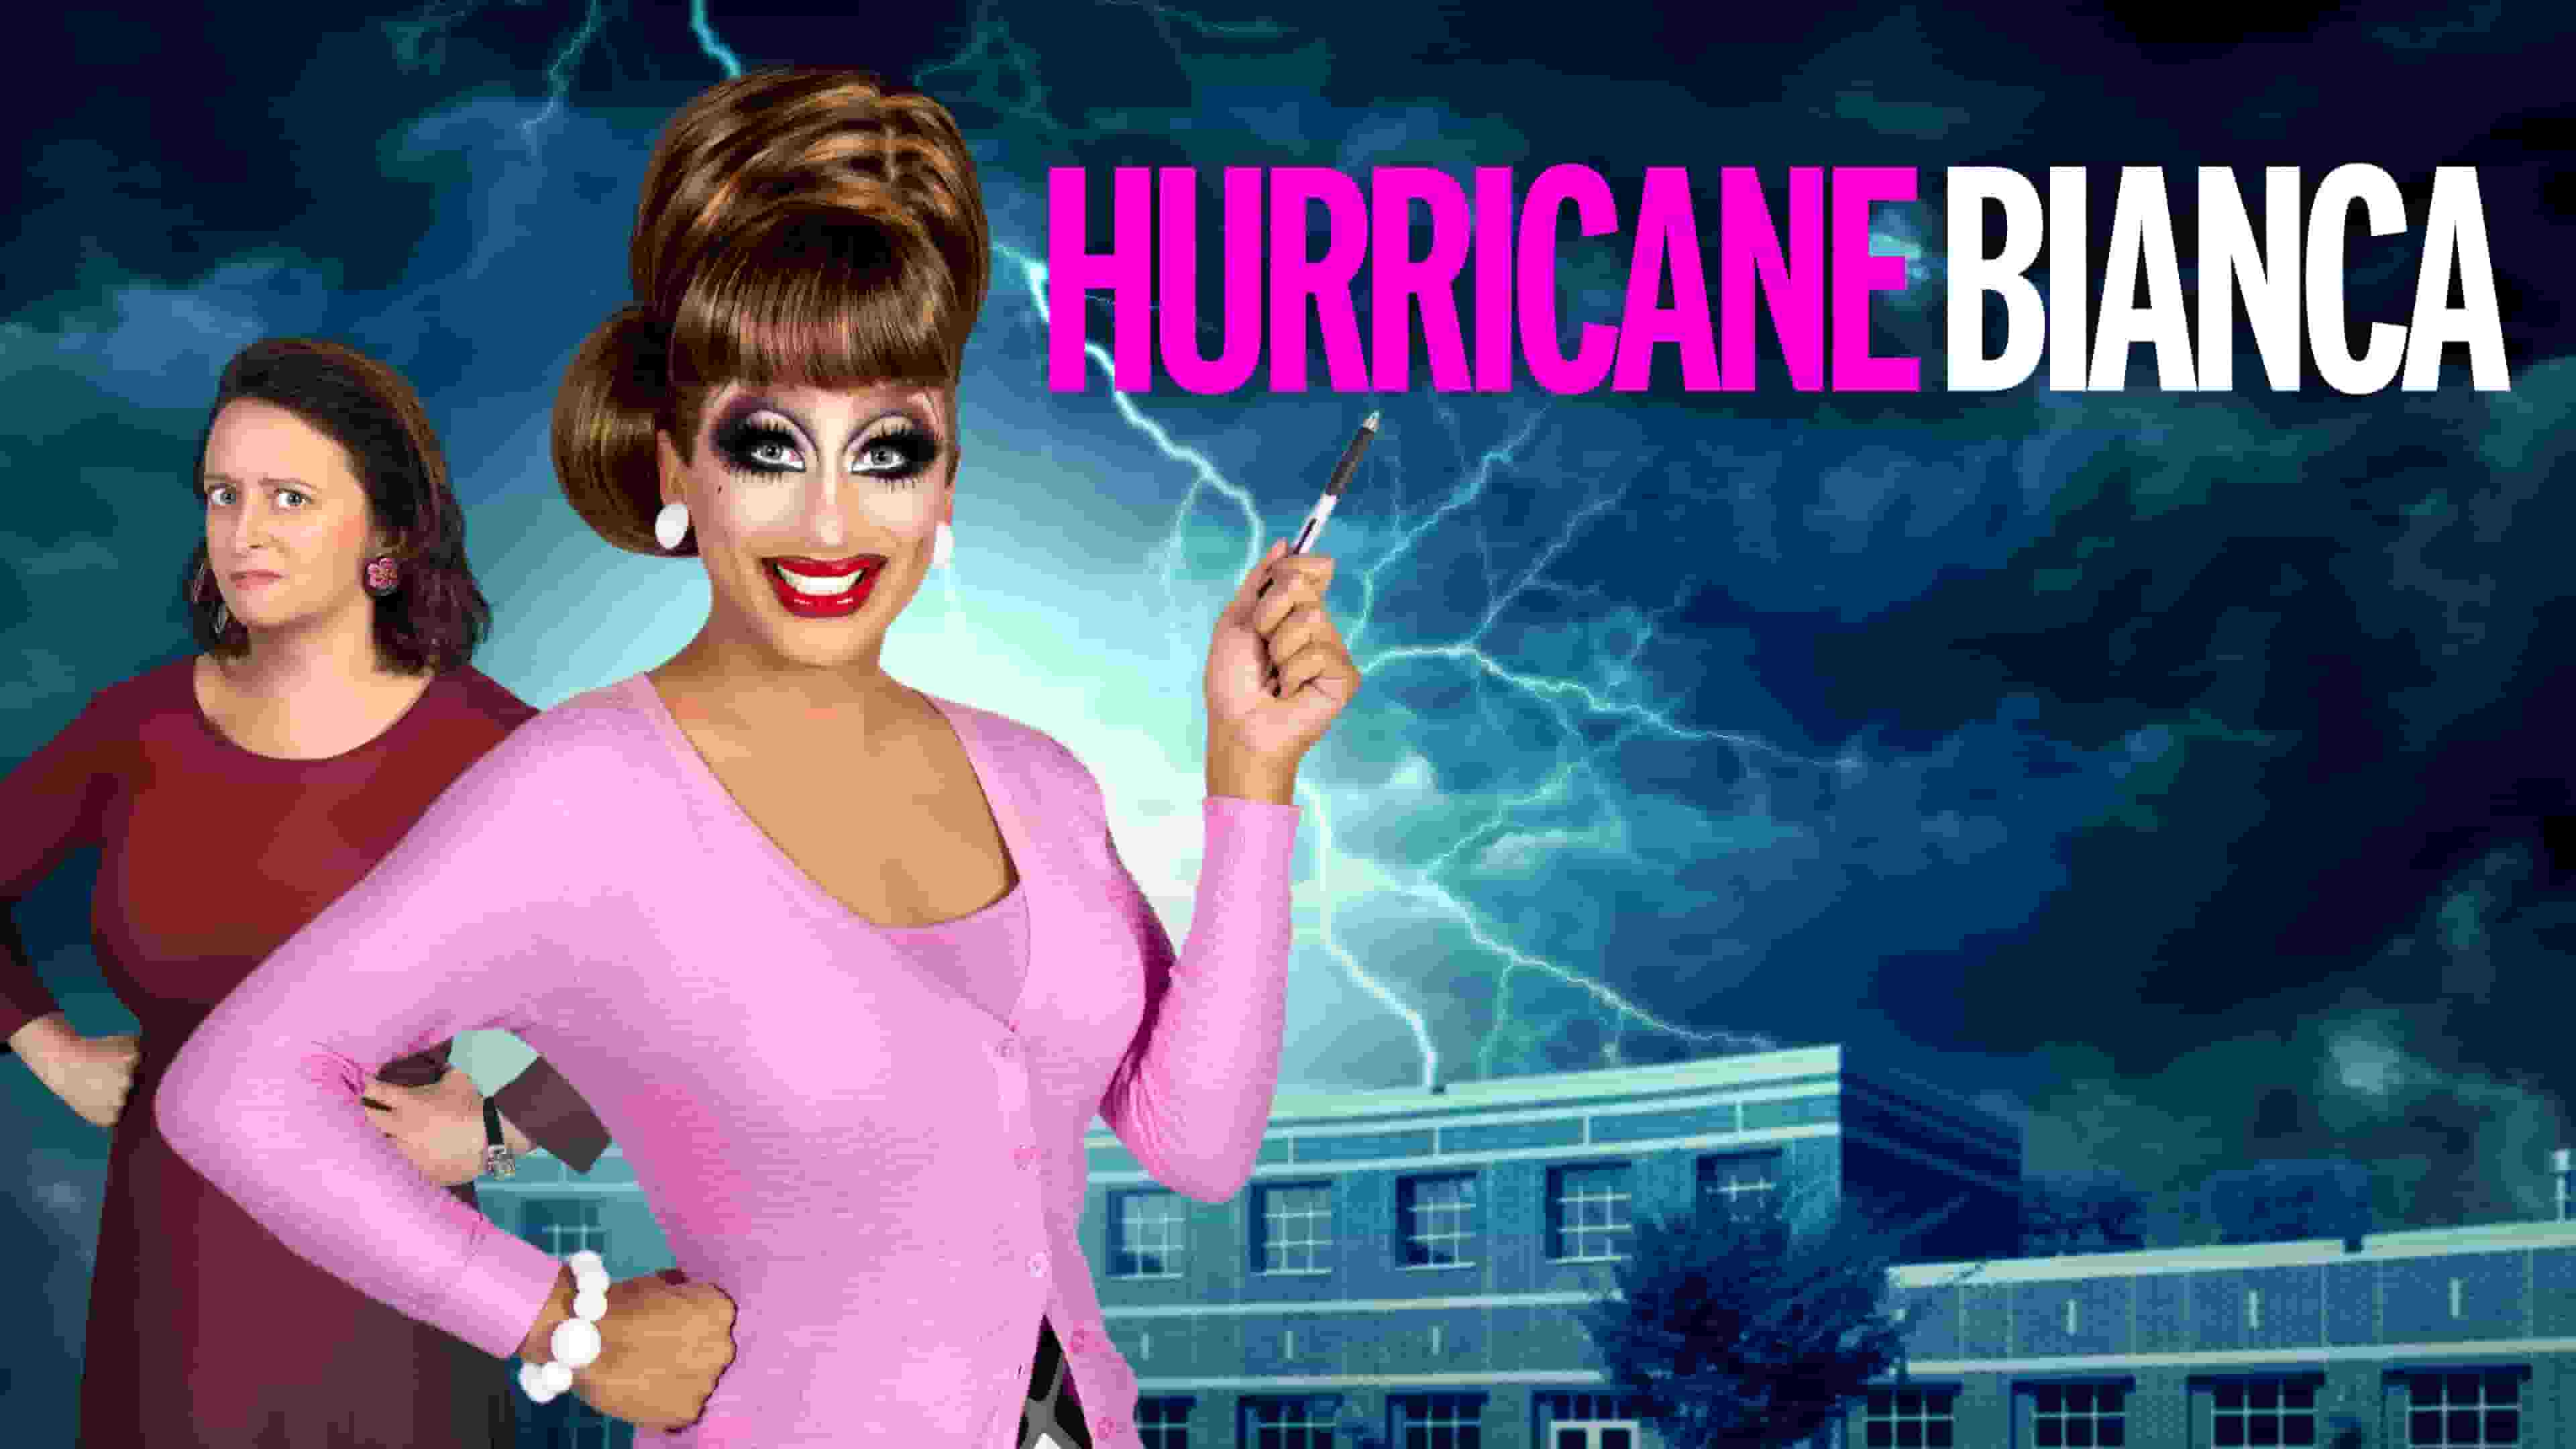 Title art for Hurricane Bianca drag queen movie